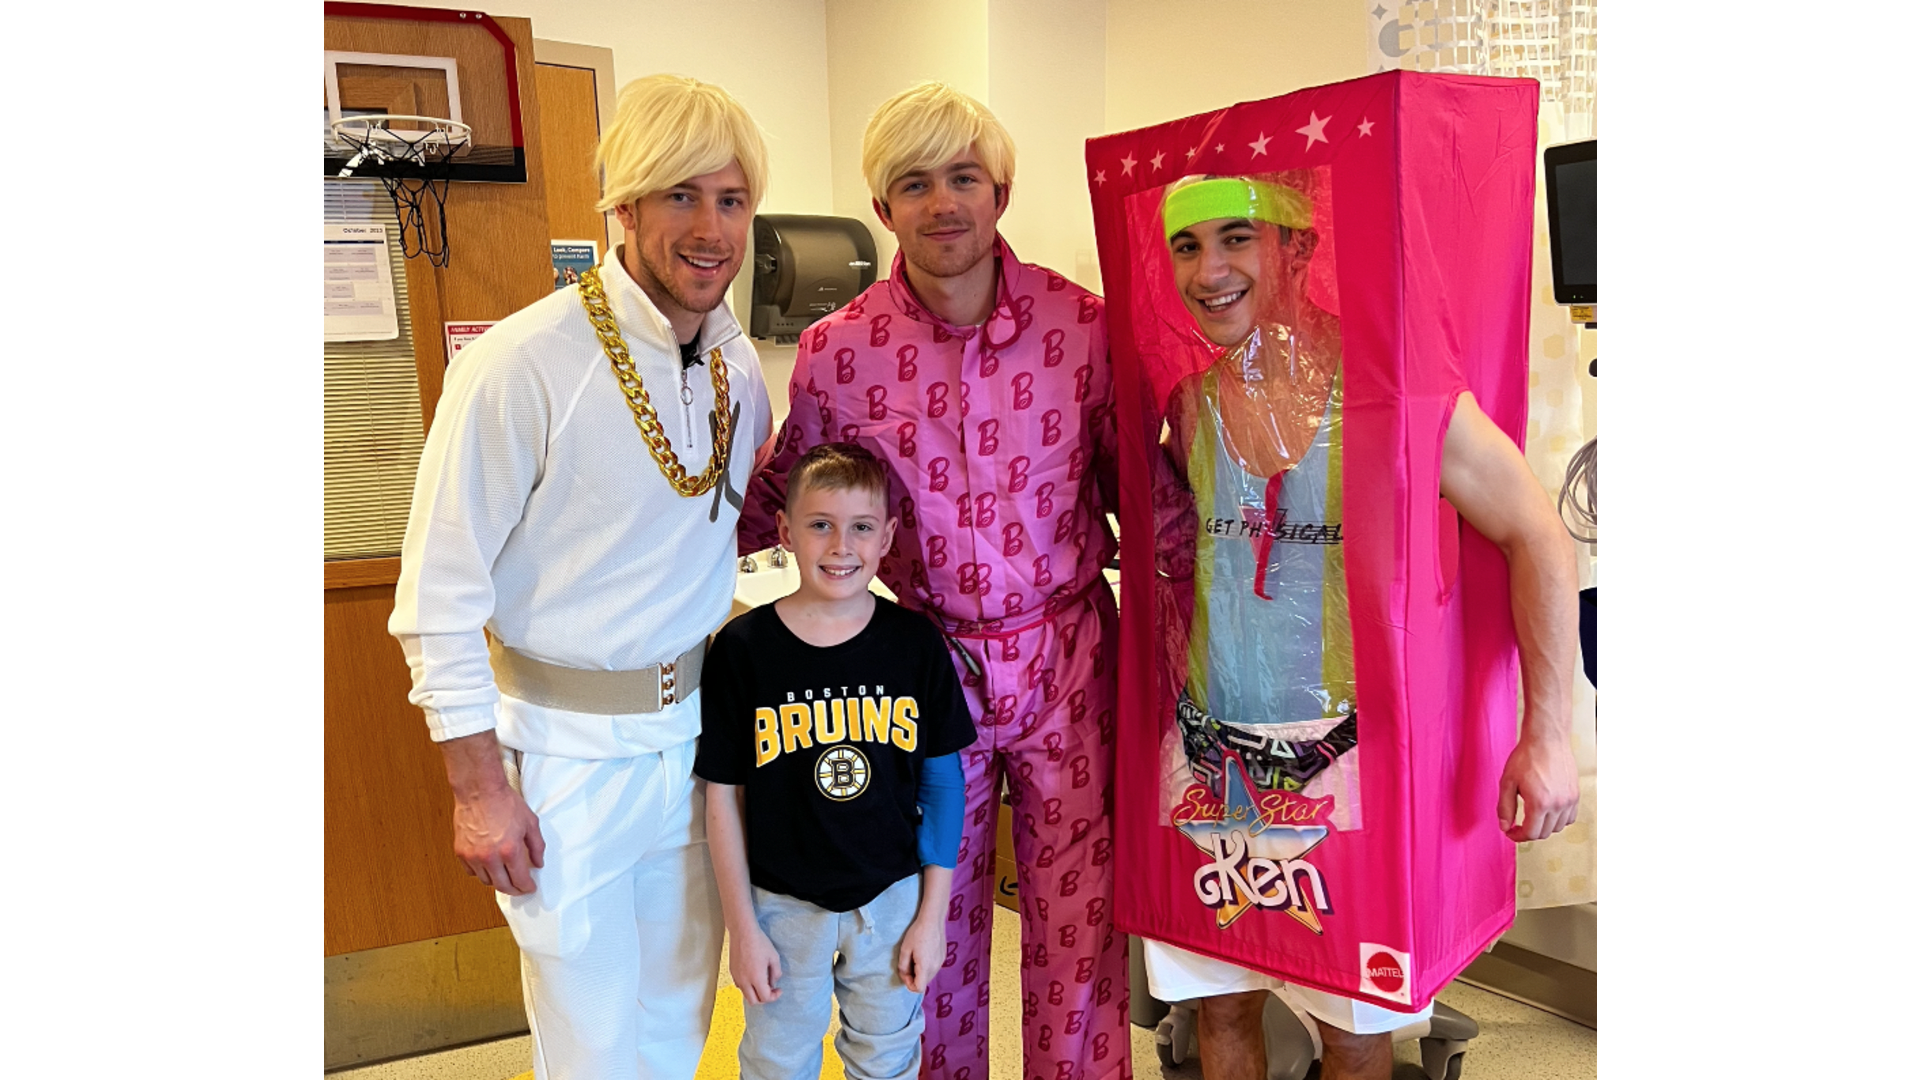 Bruins dress up in Barbie, Ken costumes for annual hospital visit